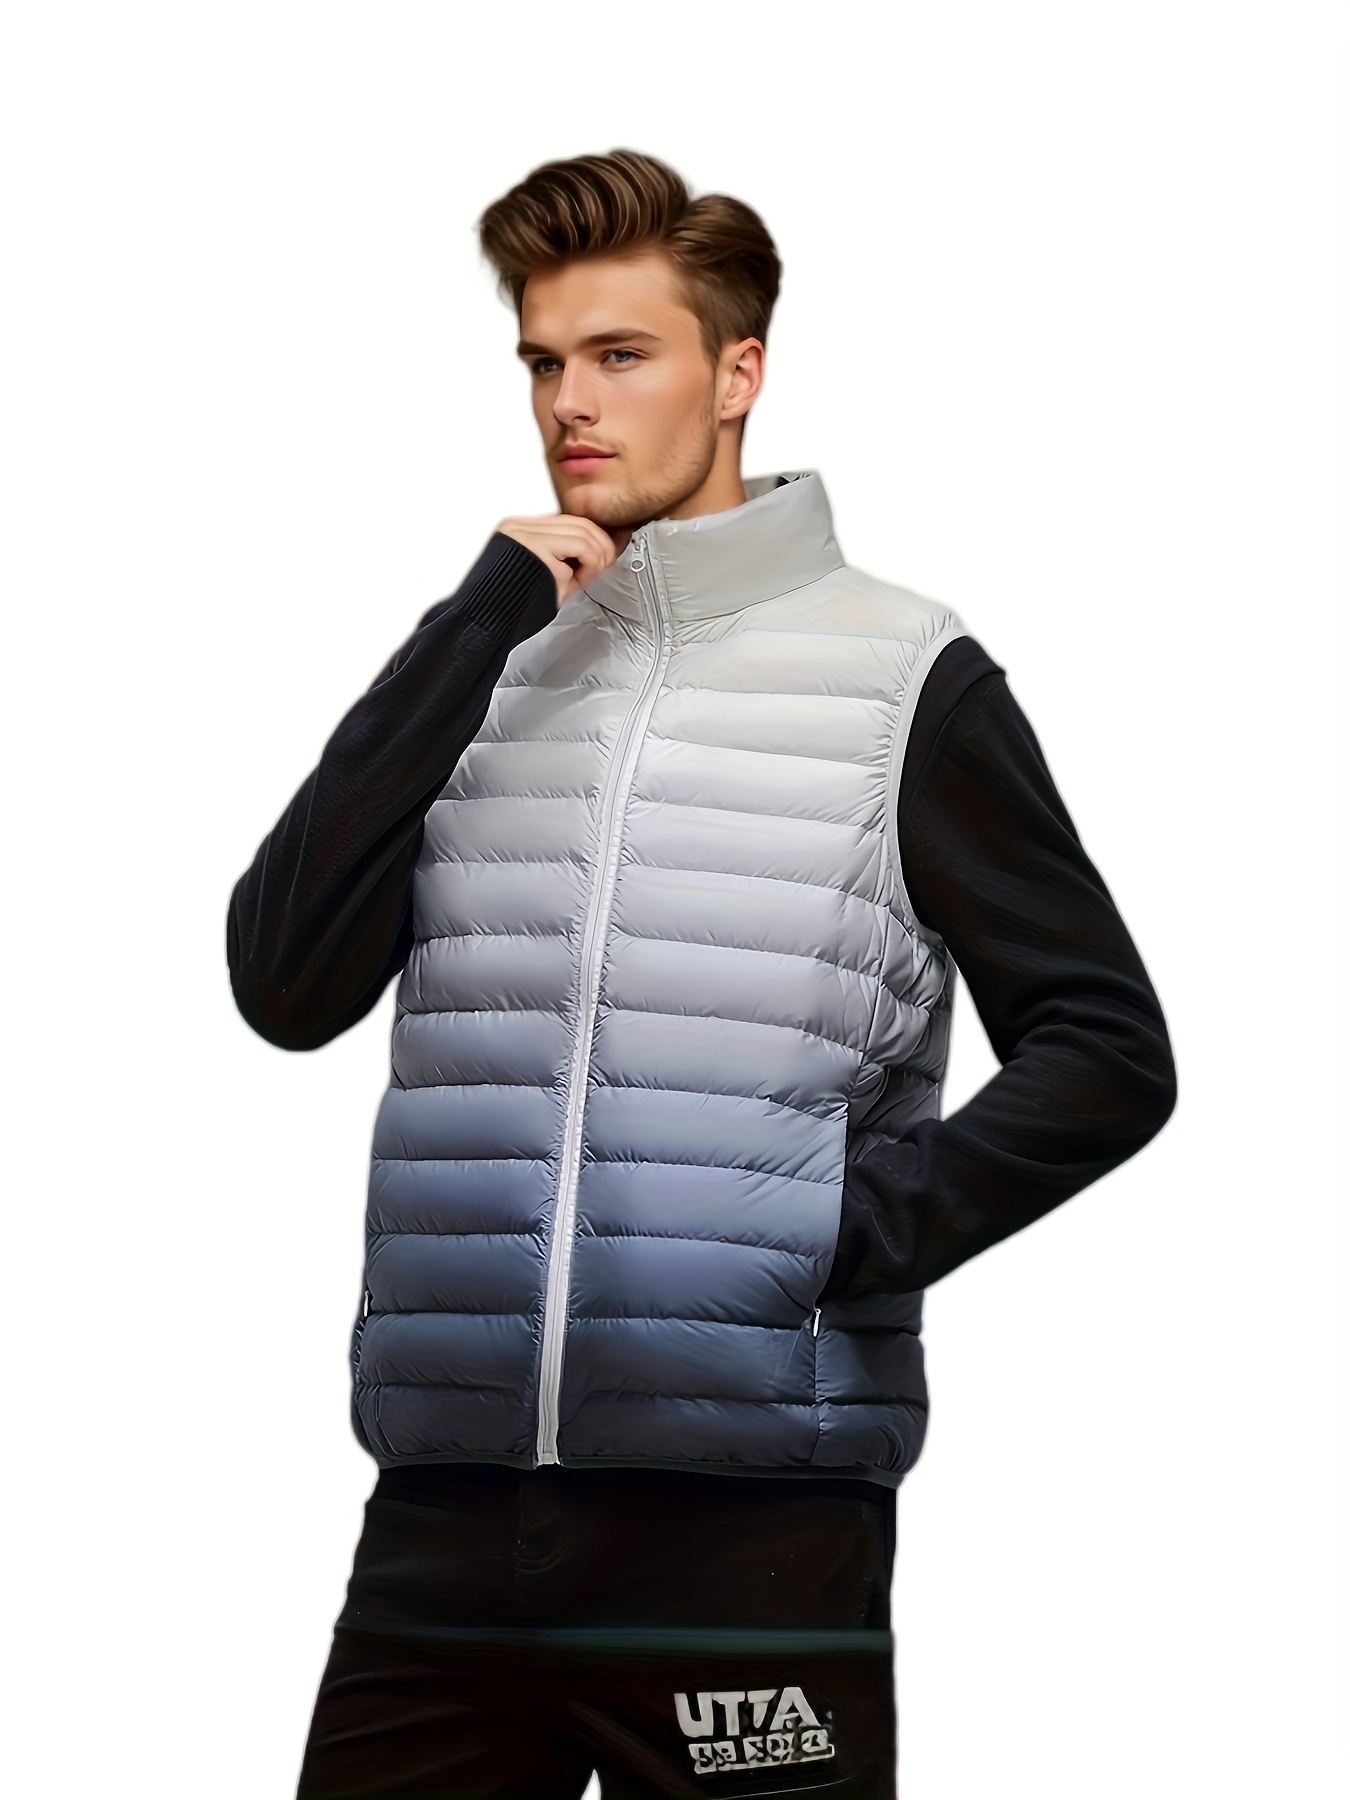 Men's Lightweight Chic Winter Vest, Casual Warm Padded Stand Collar Vest